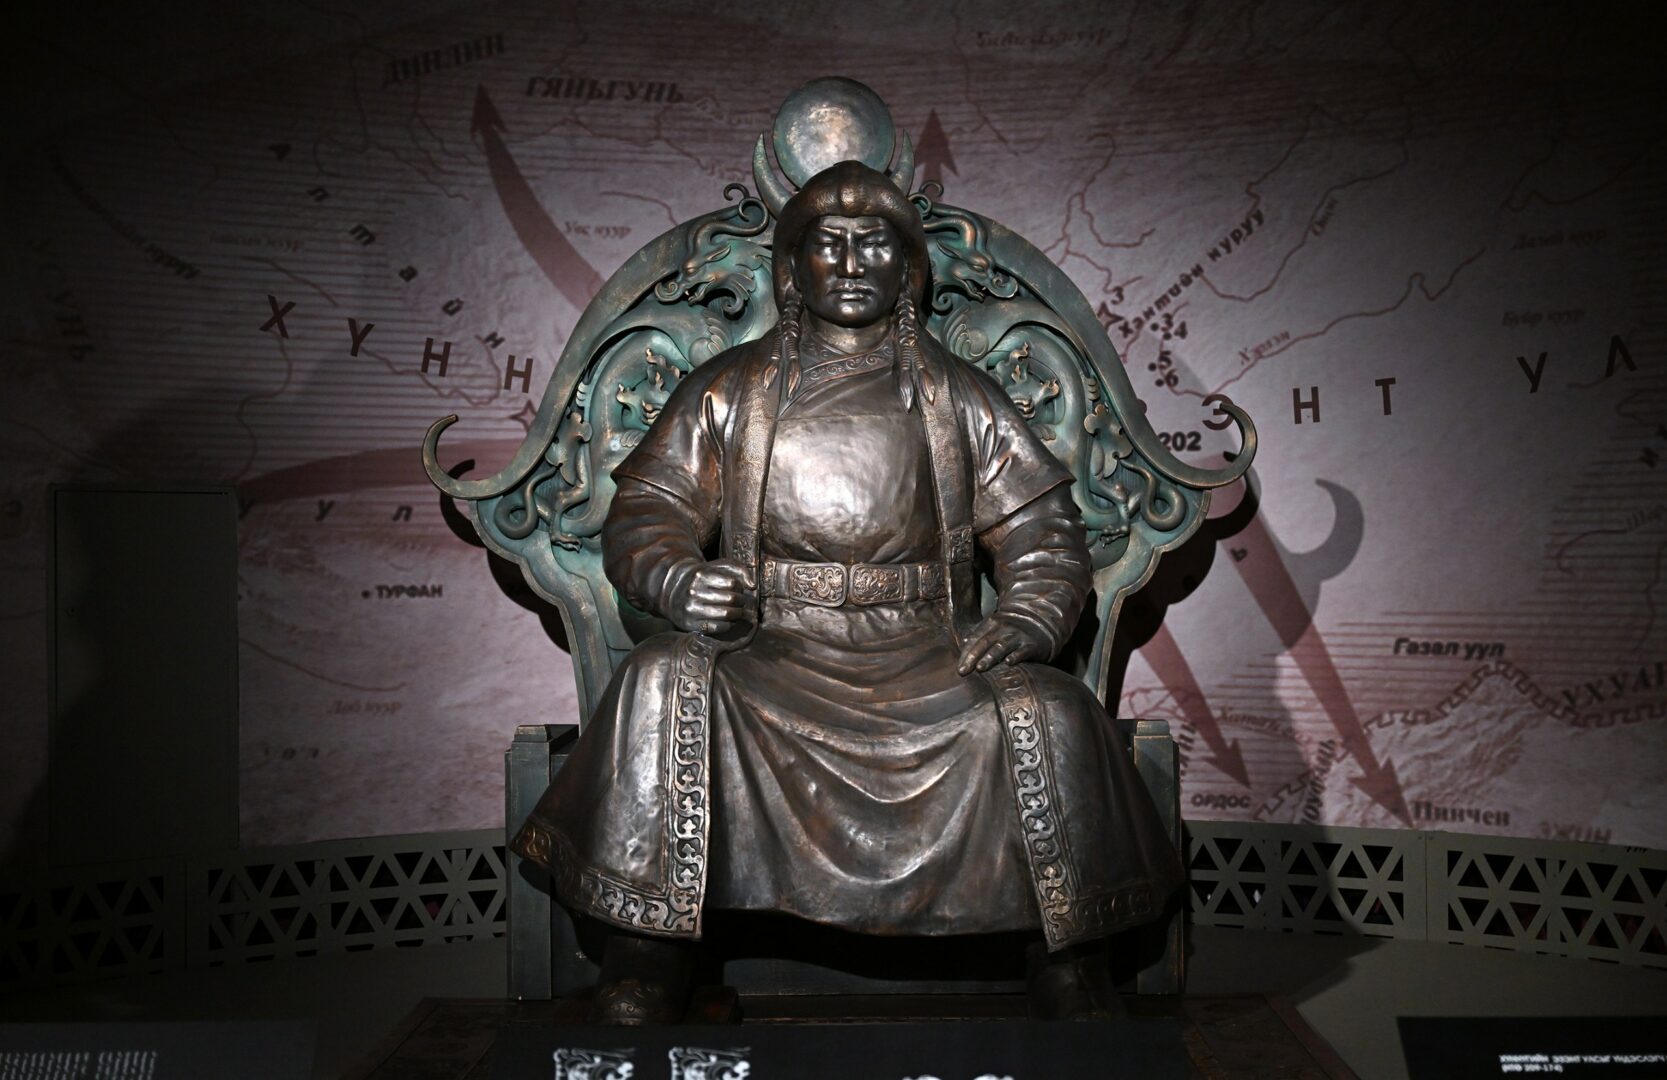 b1b2b9ba 4069 46ae bb43 69adc13b724a Садыр Жапаров вместе с супругой посетили музей «Чингисхан» в Улан-Баторе - фото